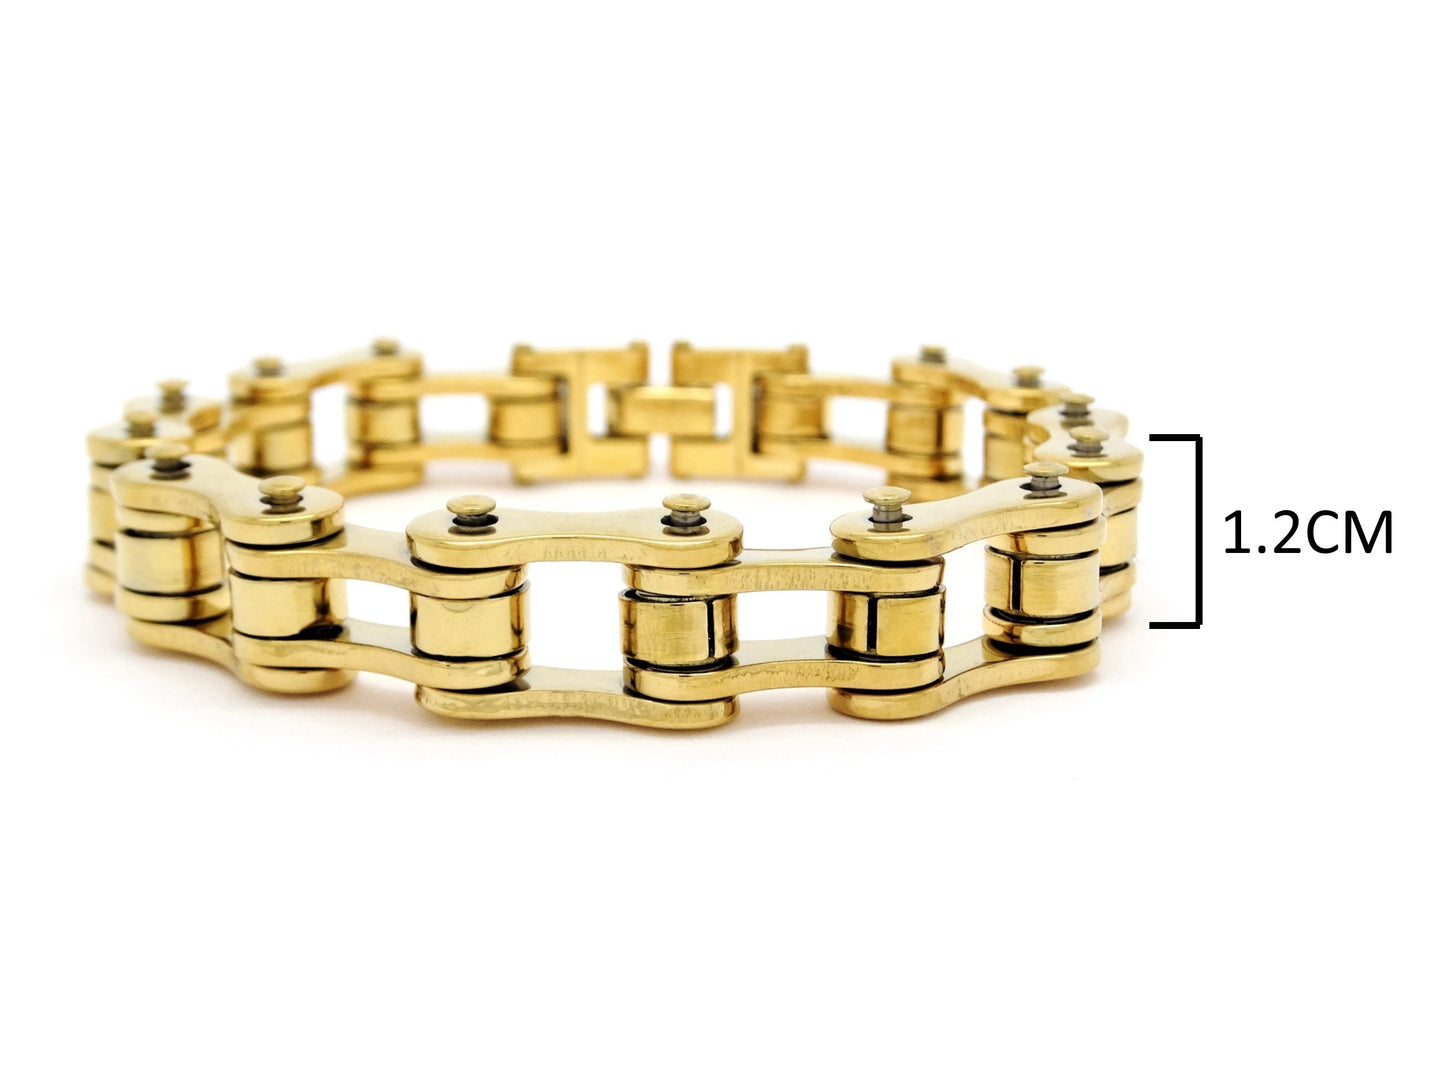 Gold stainless steel bike chain bracelet MEASUREMENT